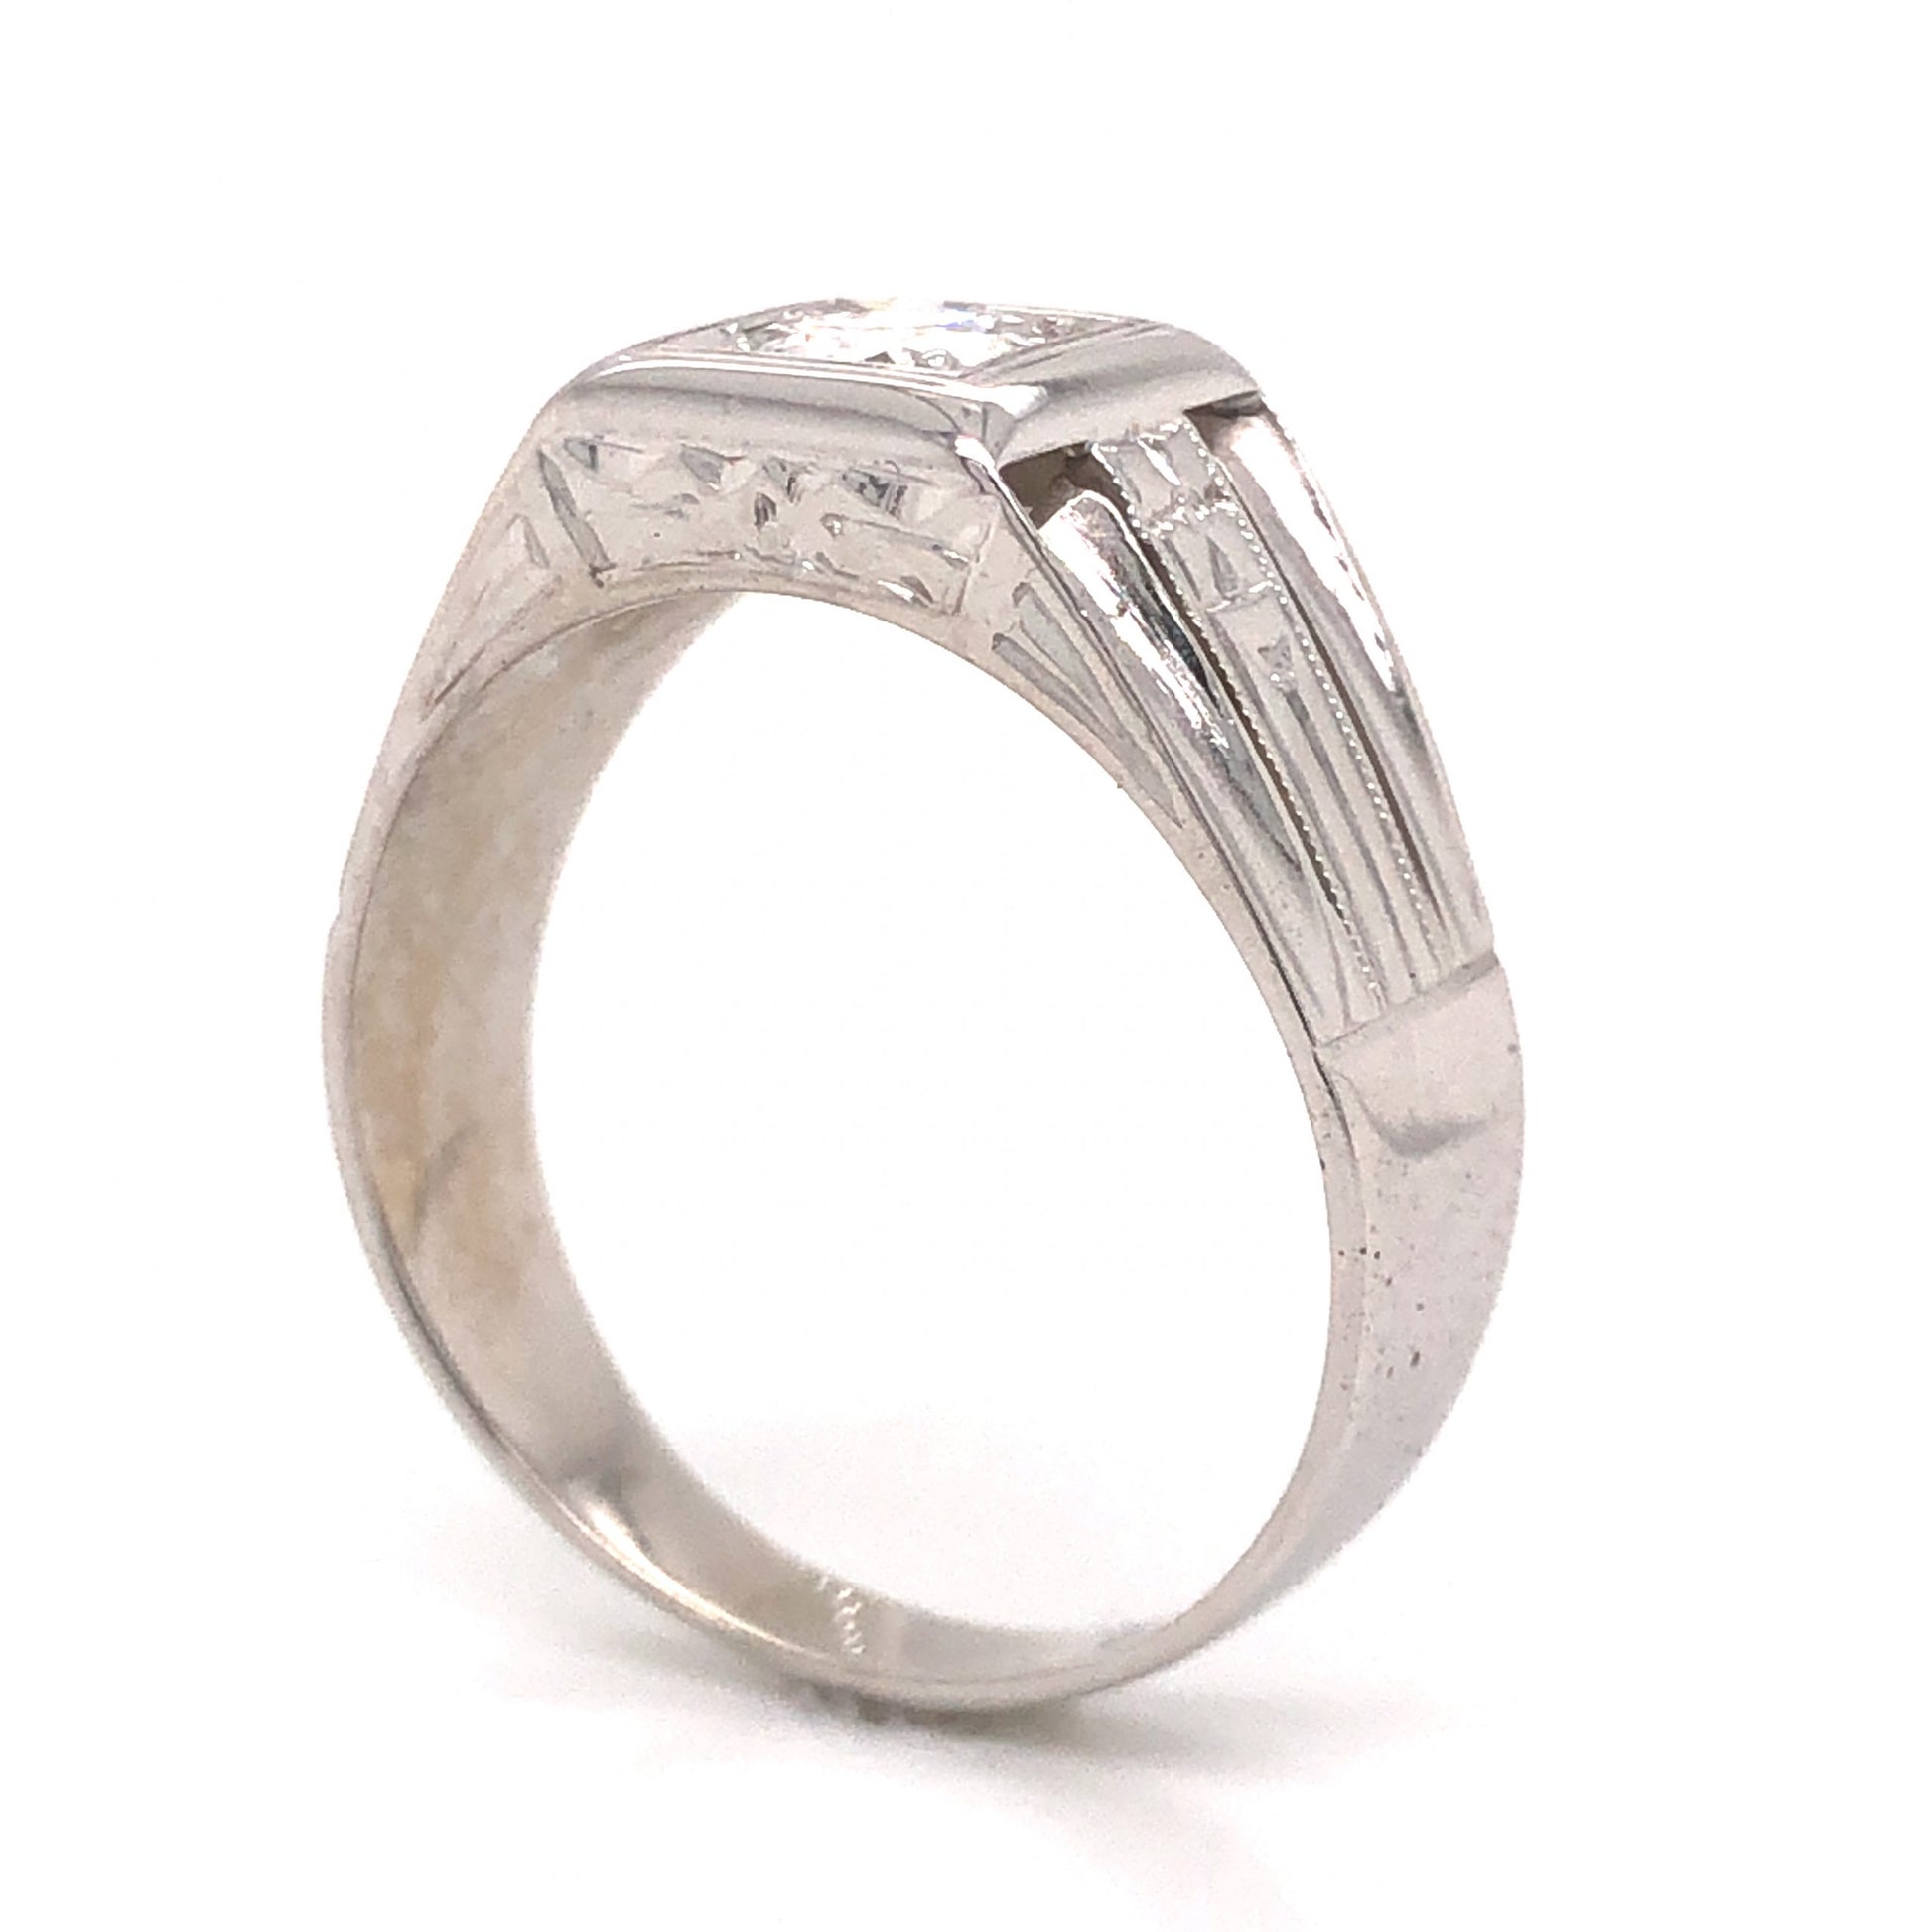 1930's Art Deco Men's Diamond Ring in 14k White GoldComposition: PlatinumRing Size: 10.75Total Diamond Weight: .86 ctTotal Gram Weight: 6.5 gInscription: B-L14K